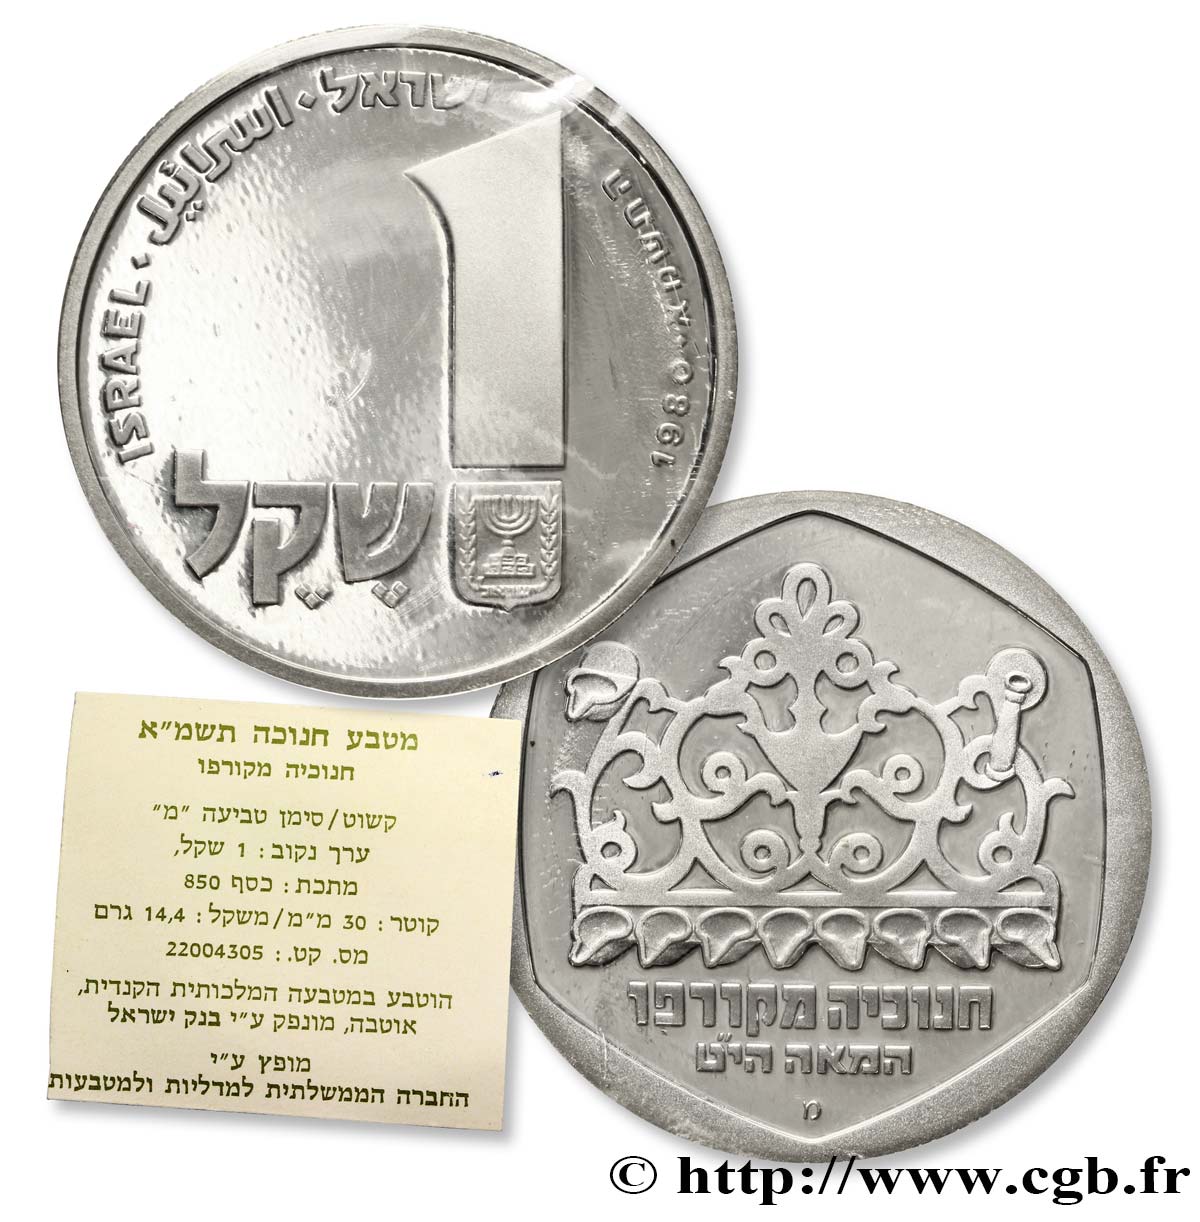 ISRAËL 1 Sheqel Hanukka - Lampe de Corfou an 5743 variété lettre “mem 1980 Royal Canadian Mint FDC 